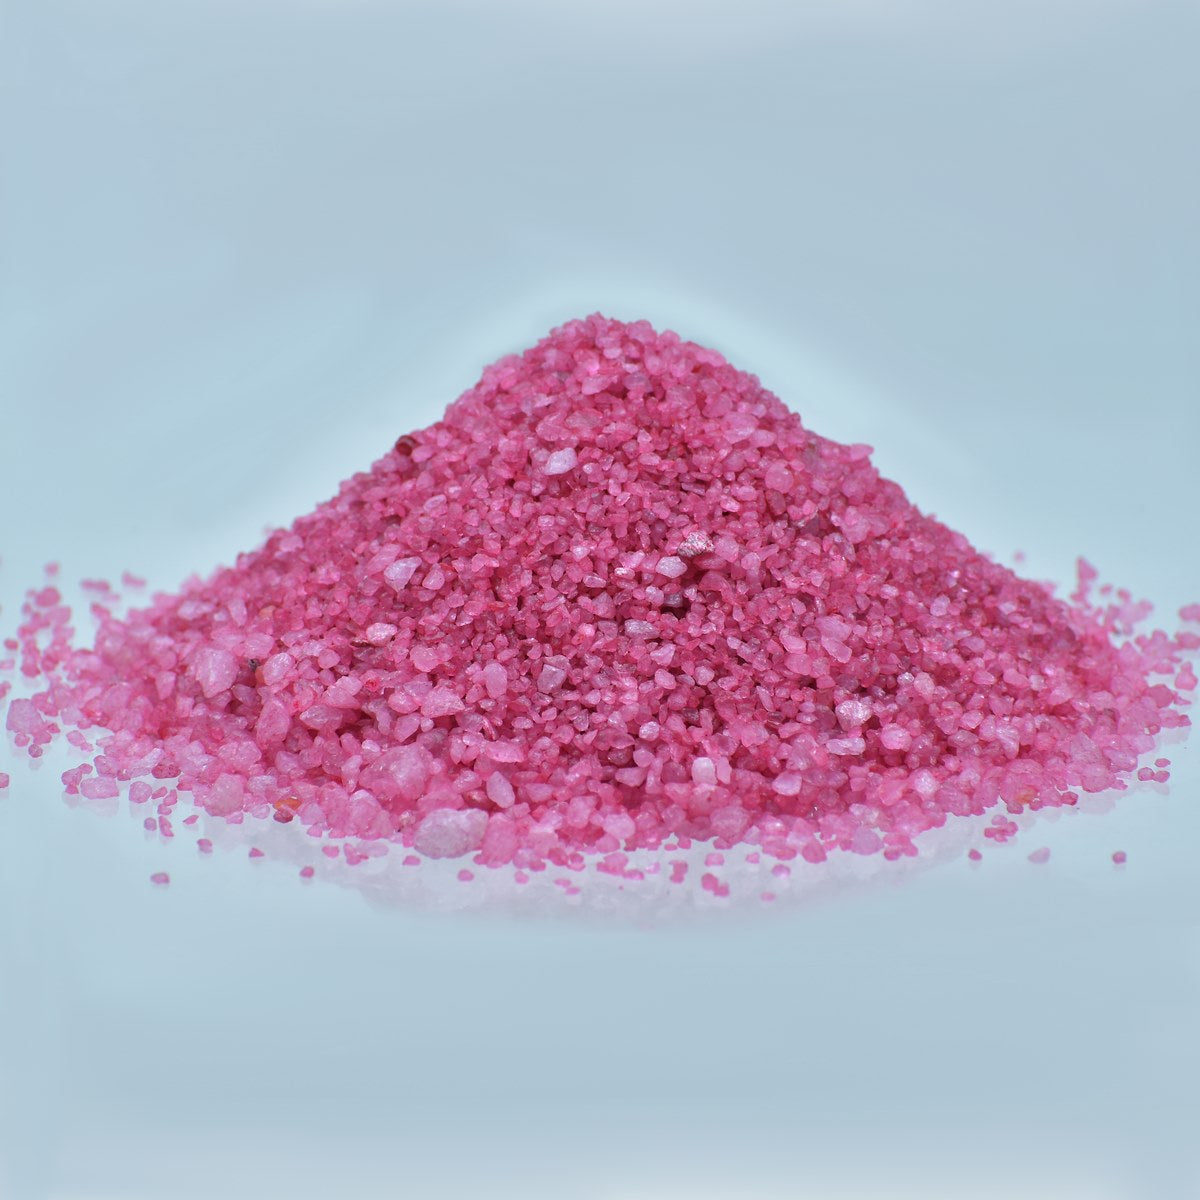 jags-mumbai Sand Jags Coloured Sugar Sand 150Gms Magenta